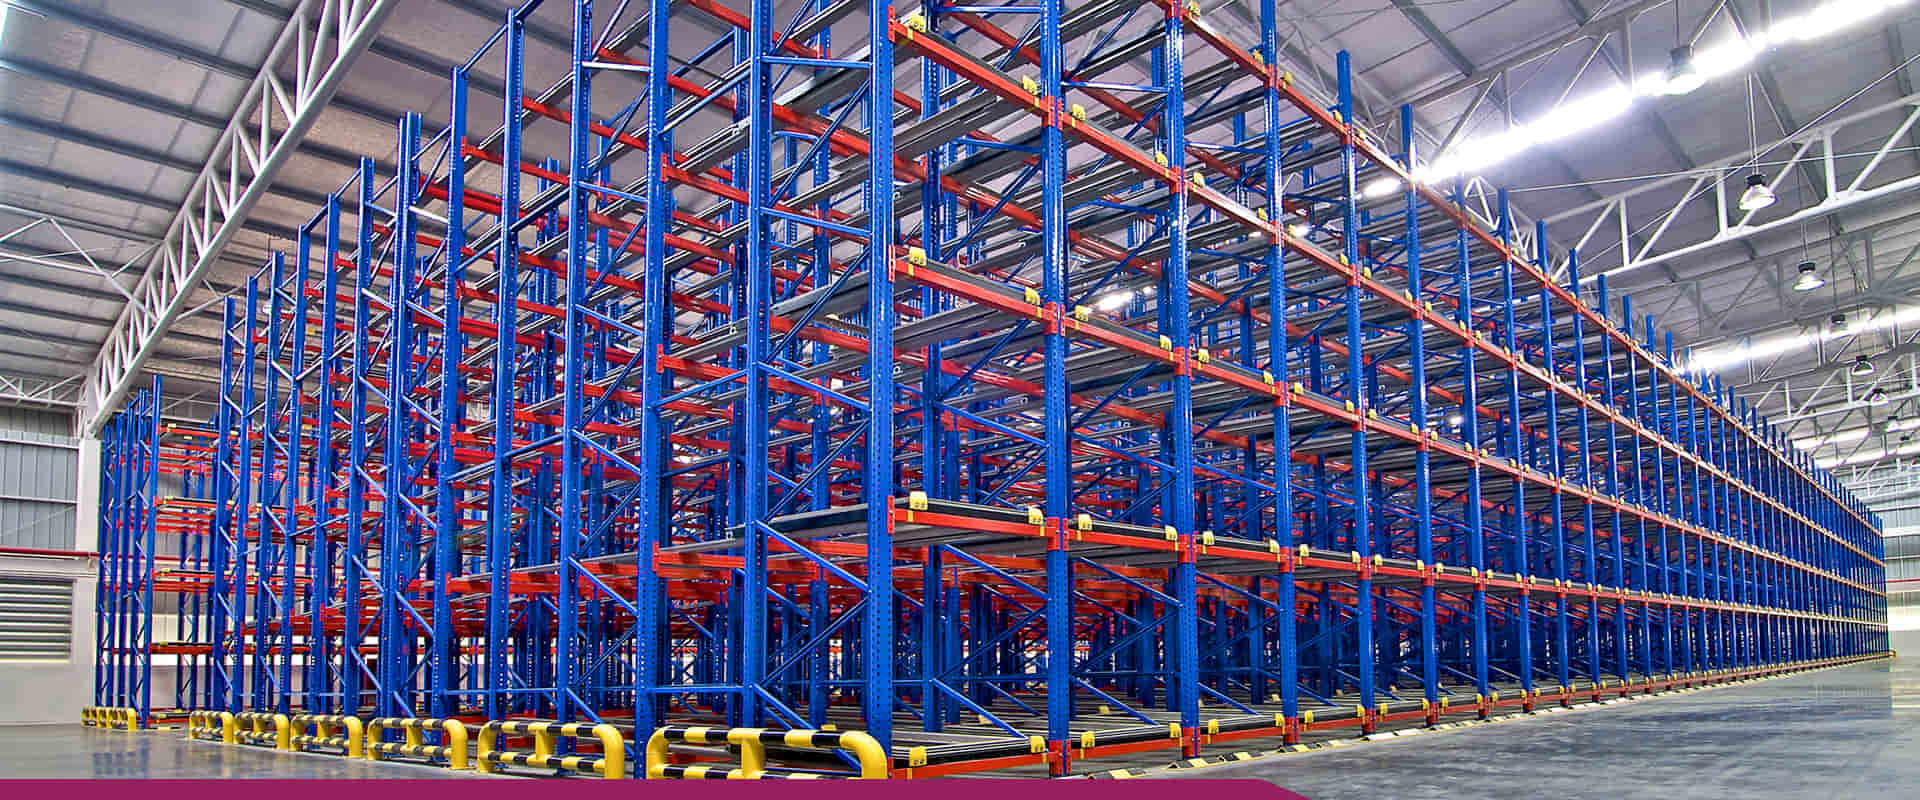 India’s Top Warehouse And Industrial Storage Racks Manufacturer In Roop Nagar